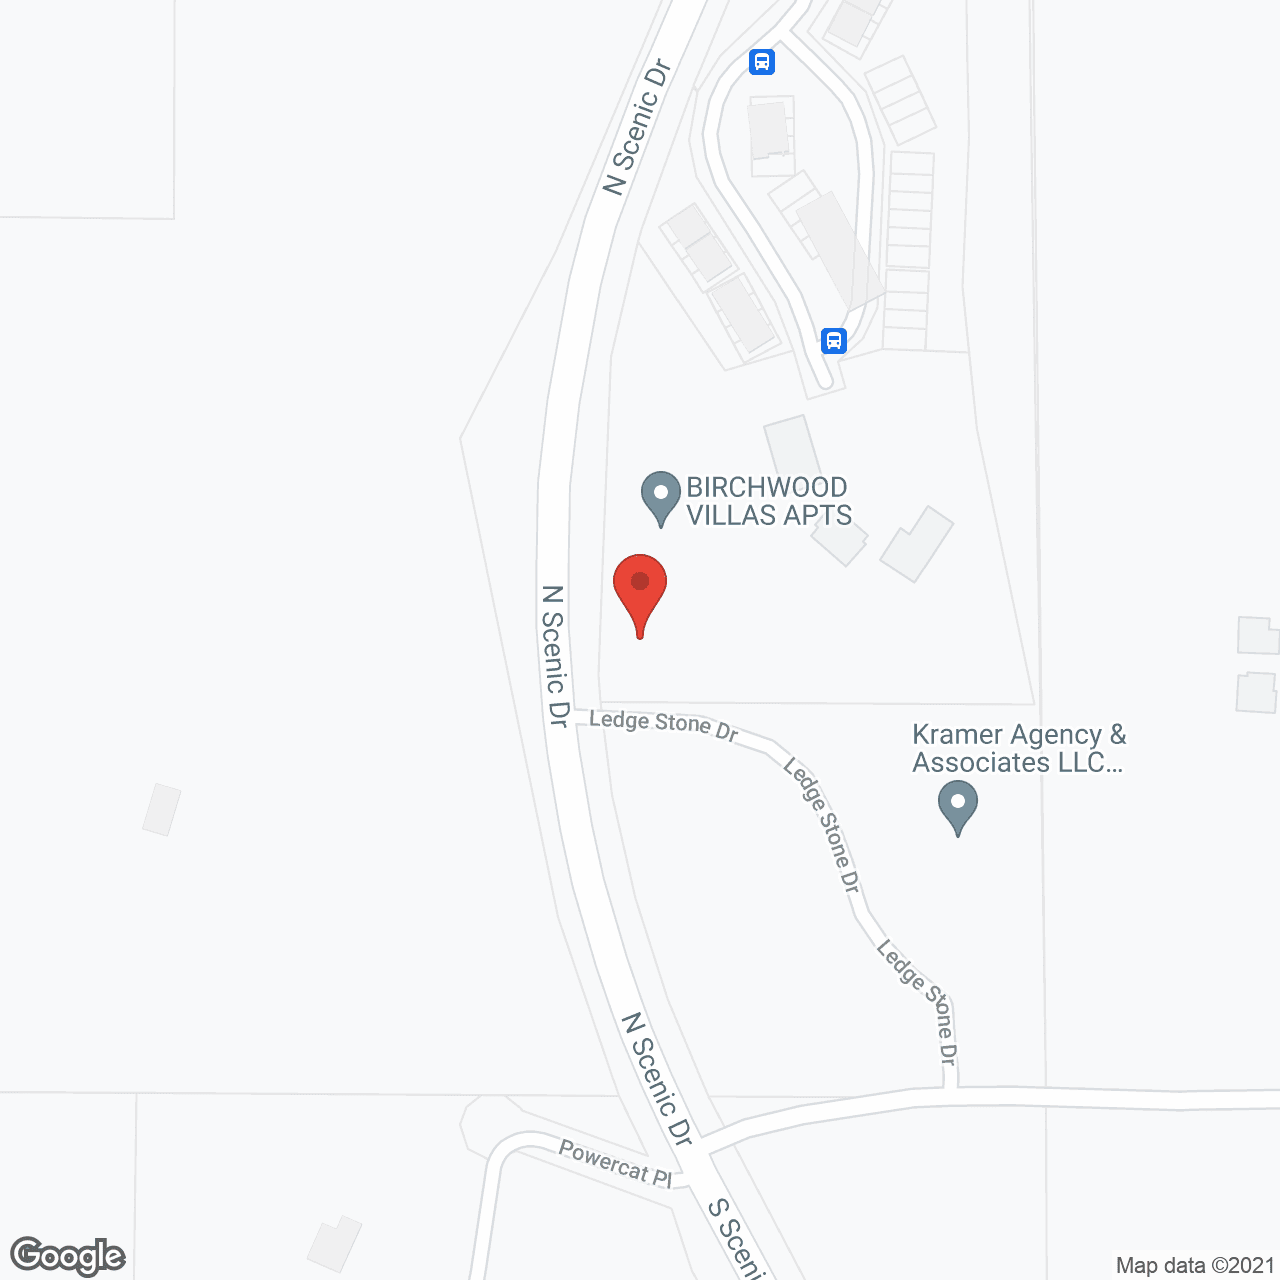 Birchwood Villas in google map